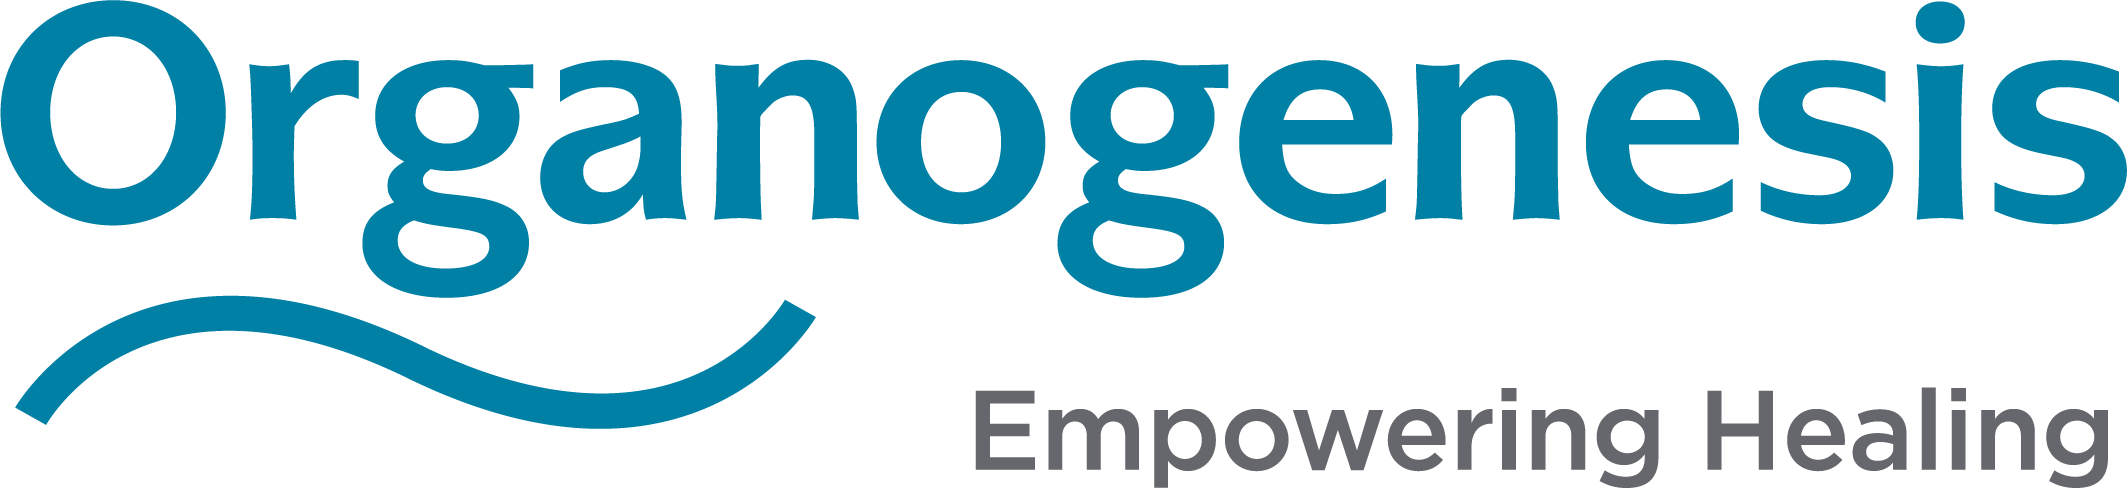 Organogenesis Logo Corporate